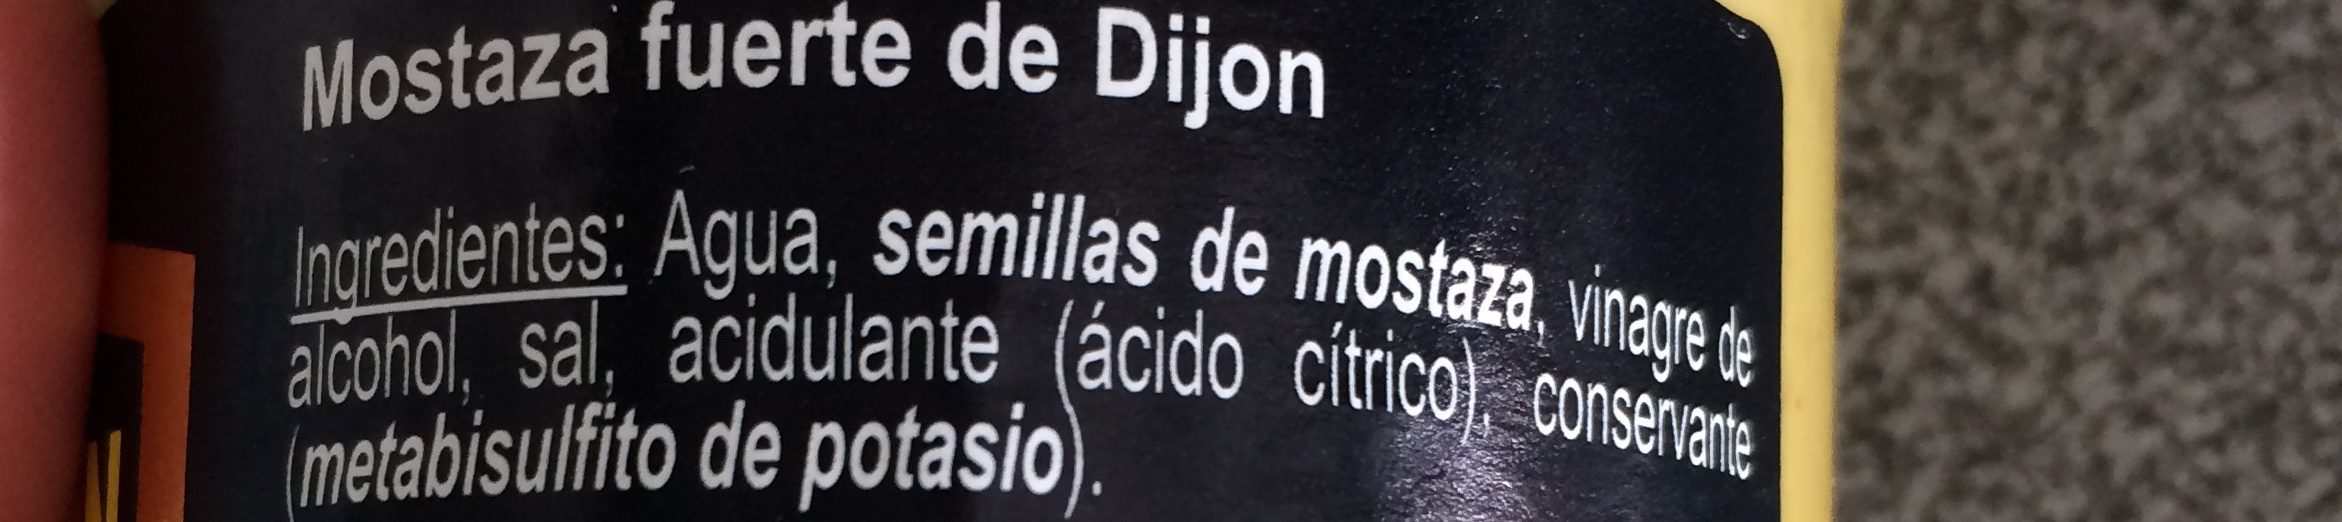 Mostaza de Dijon - Ingredients - es